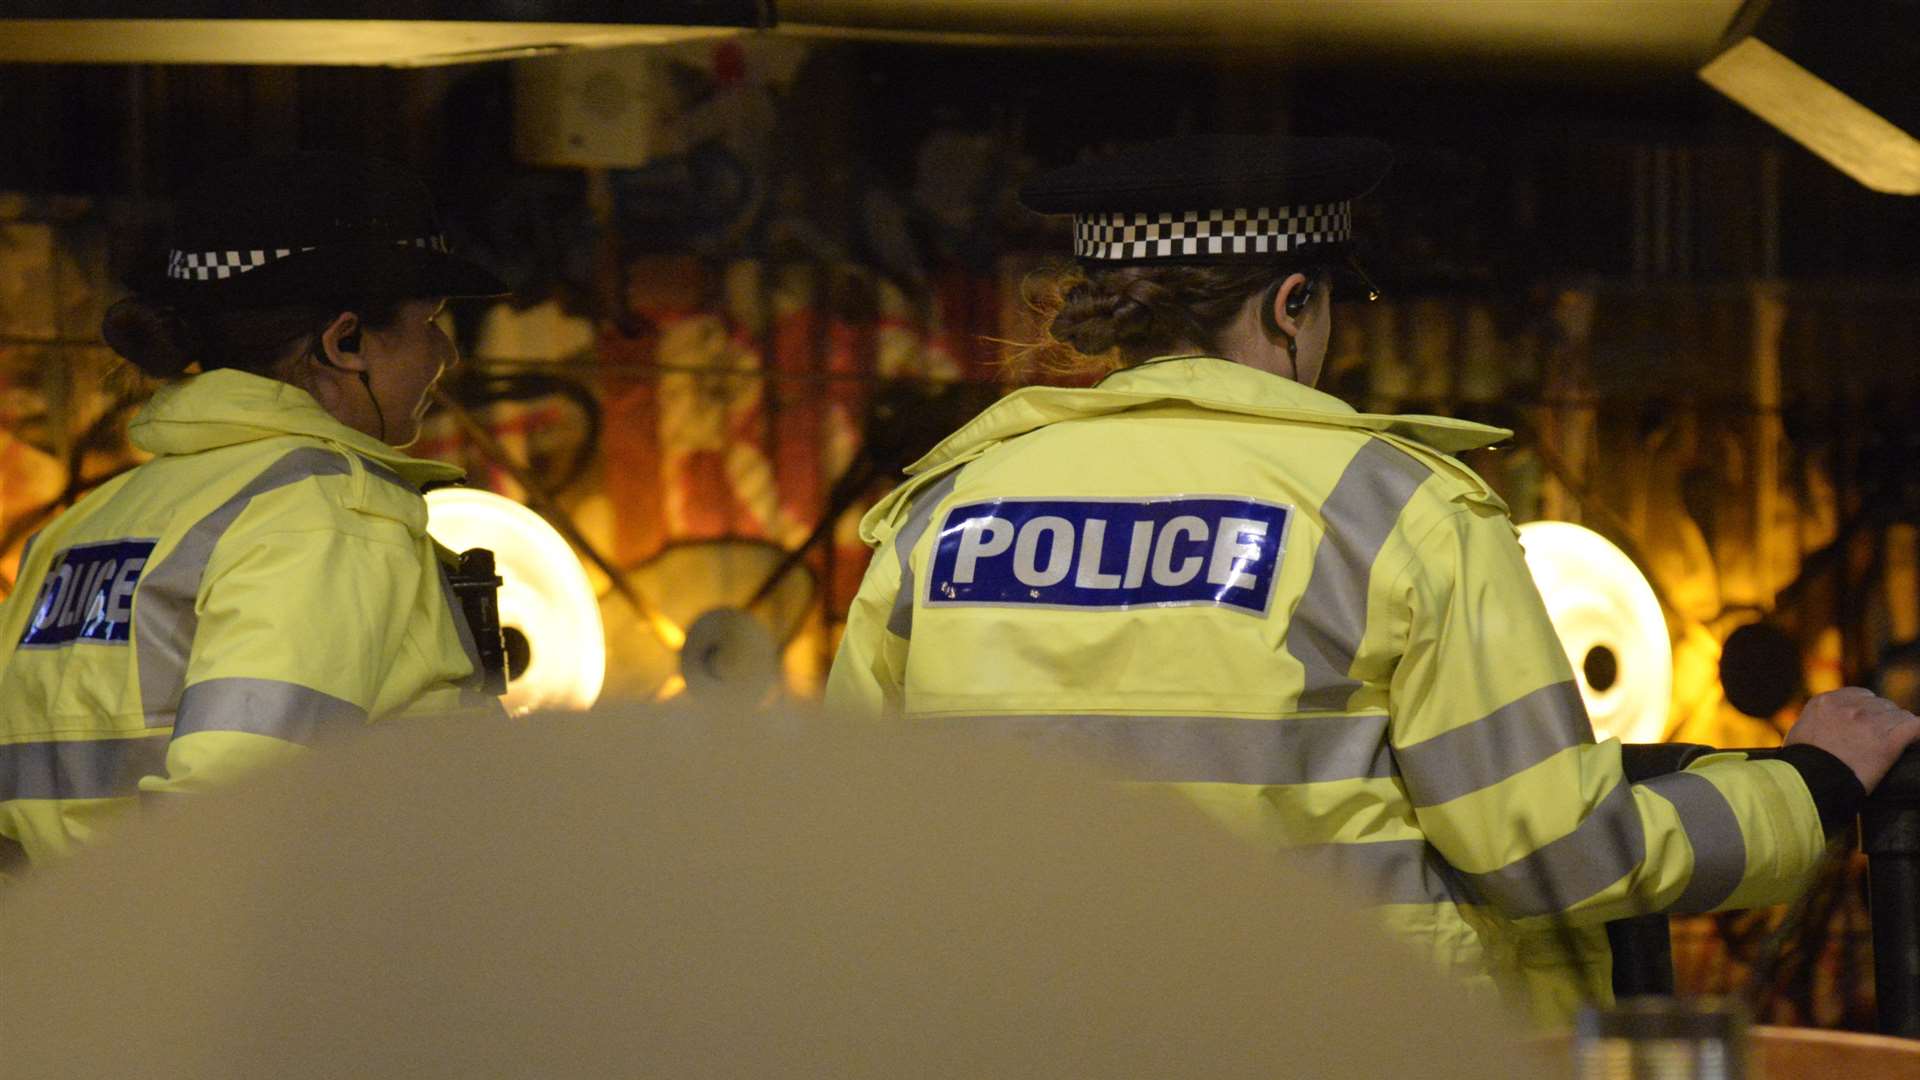 Police visit one of Canterbury's establishments